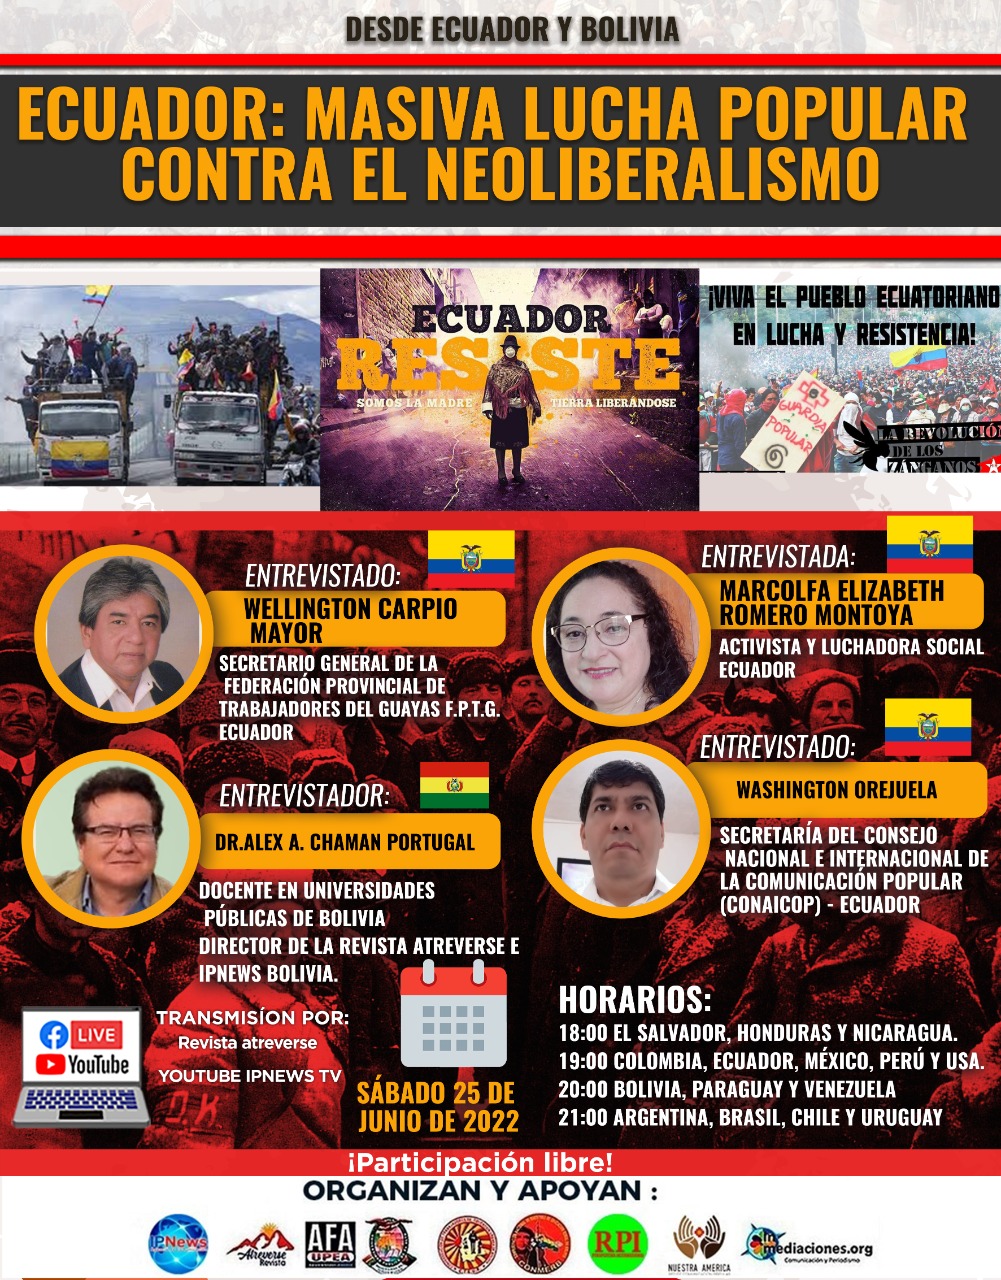 ECUADOR: LUCHA CONTRA EL NEOLIBERALISMO